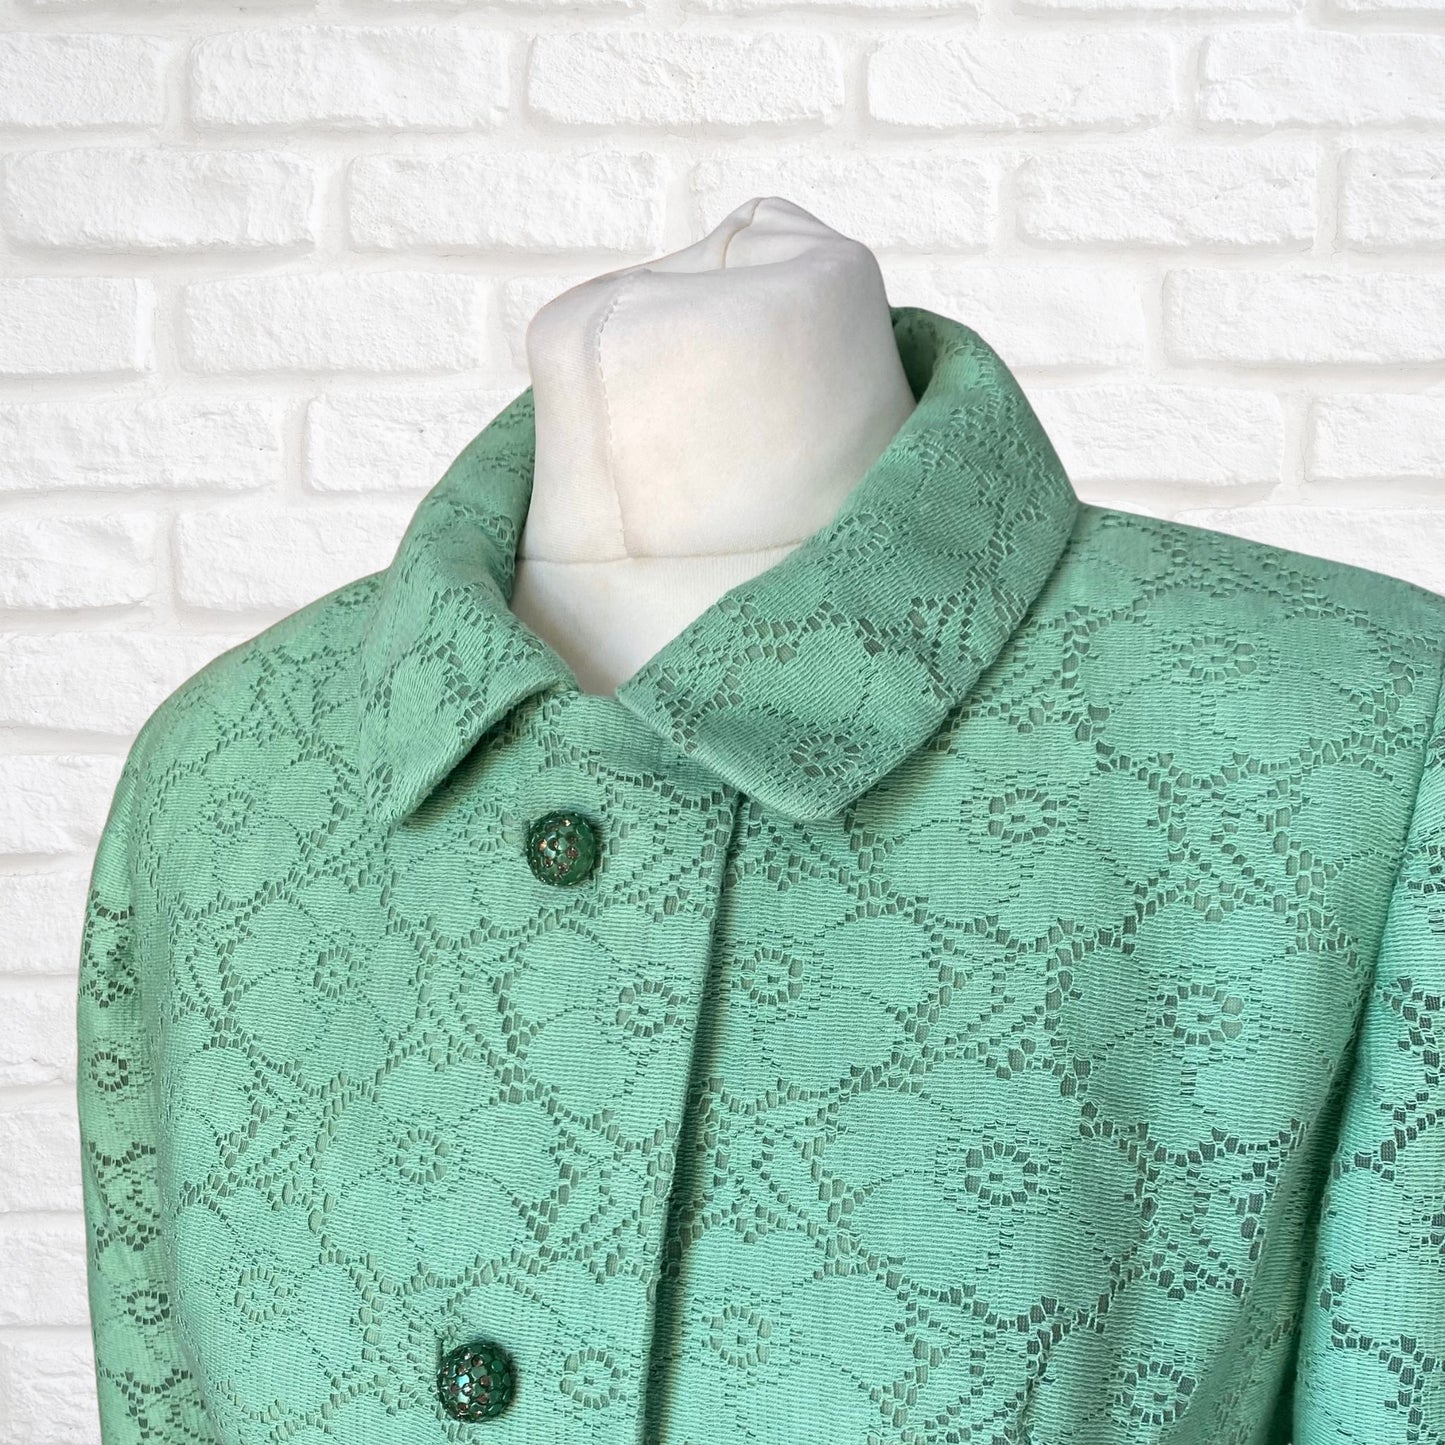 60s style mint green vintage lace coat/ dress. Approx UK size 10-12